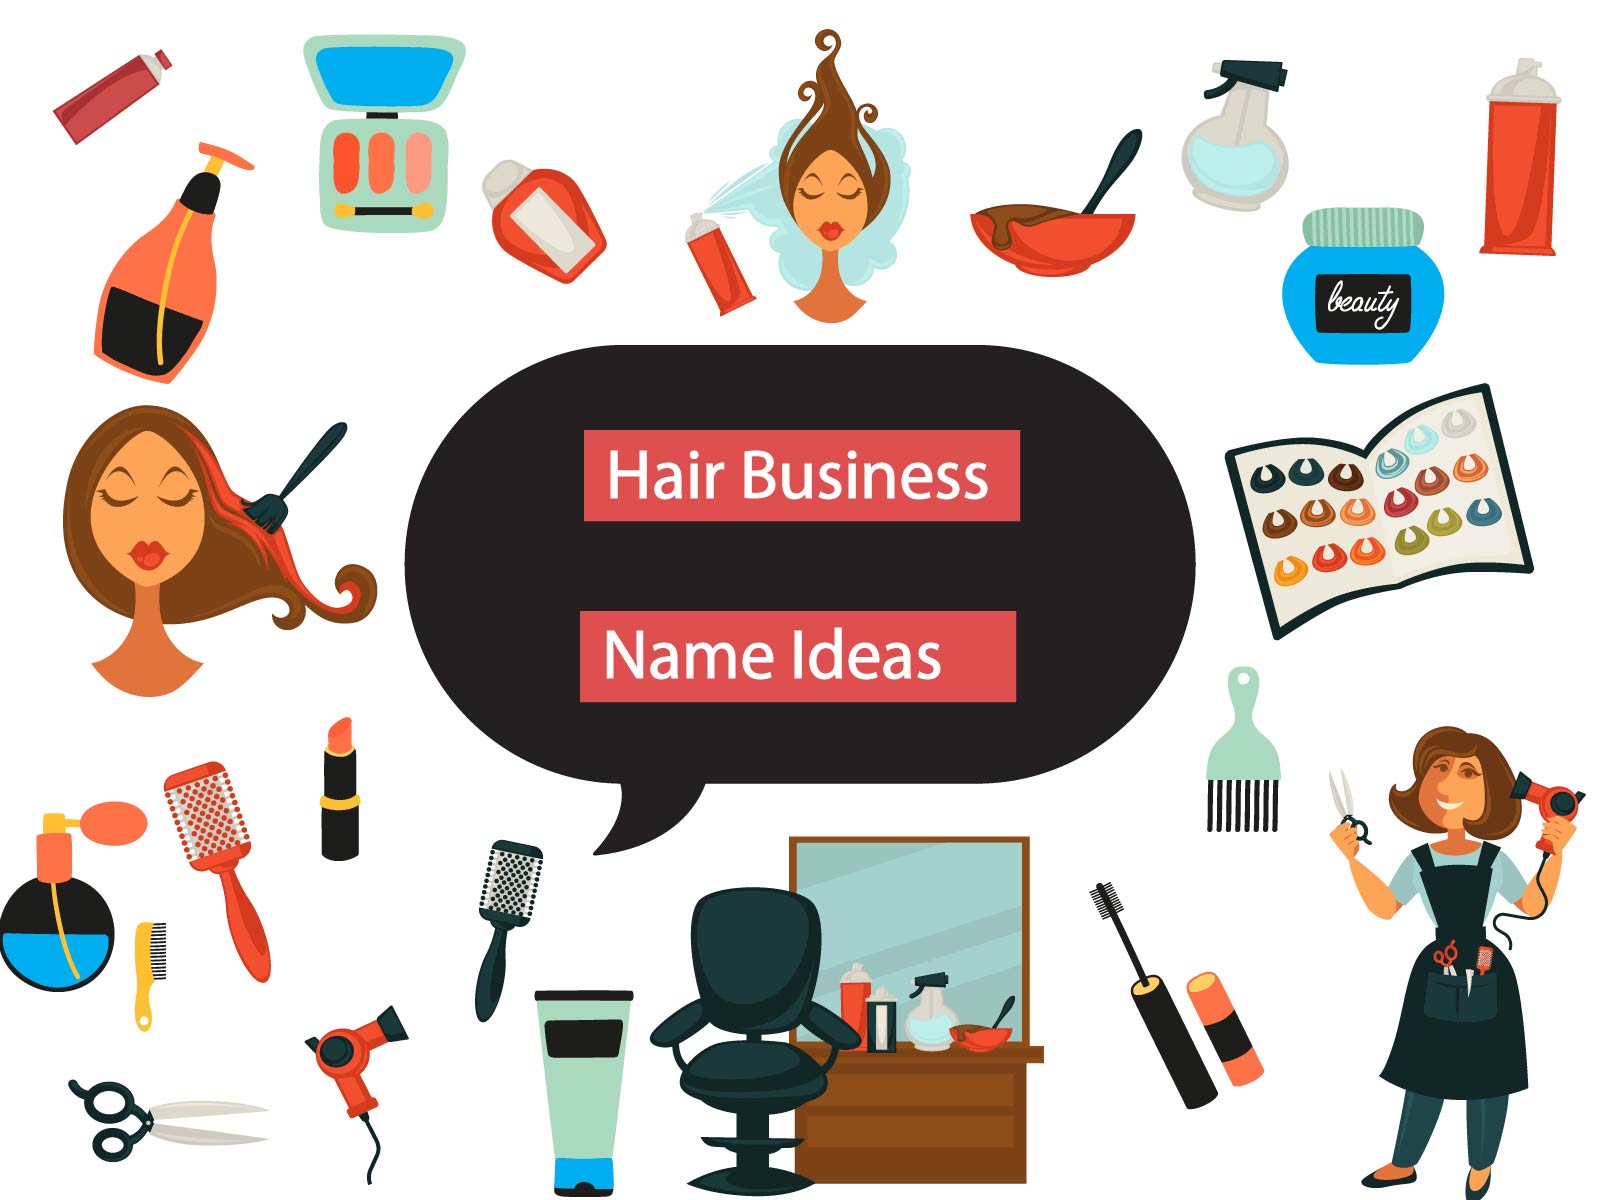 Hair business name ideas